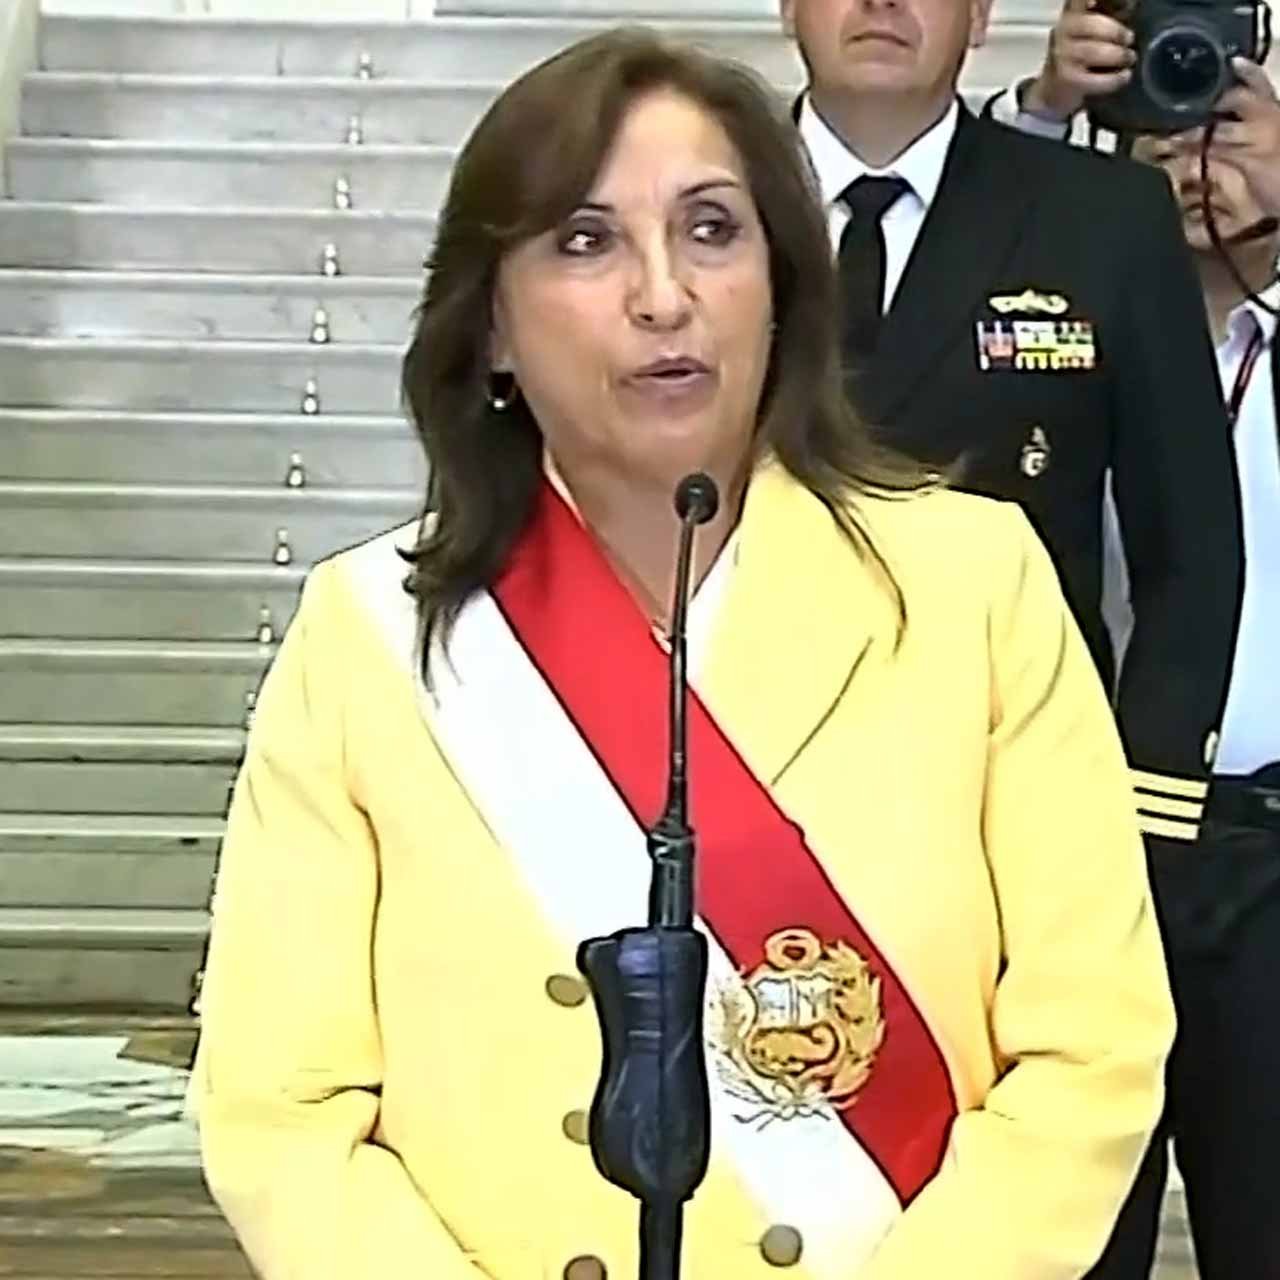 De Presidencia de la República del Perú - Screenshot from YouTube, CC BY 3.0, https://commons.wikimedia.org/w/index.php?curid=126427819